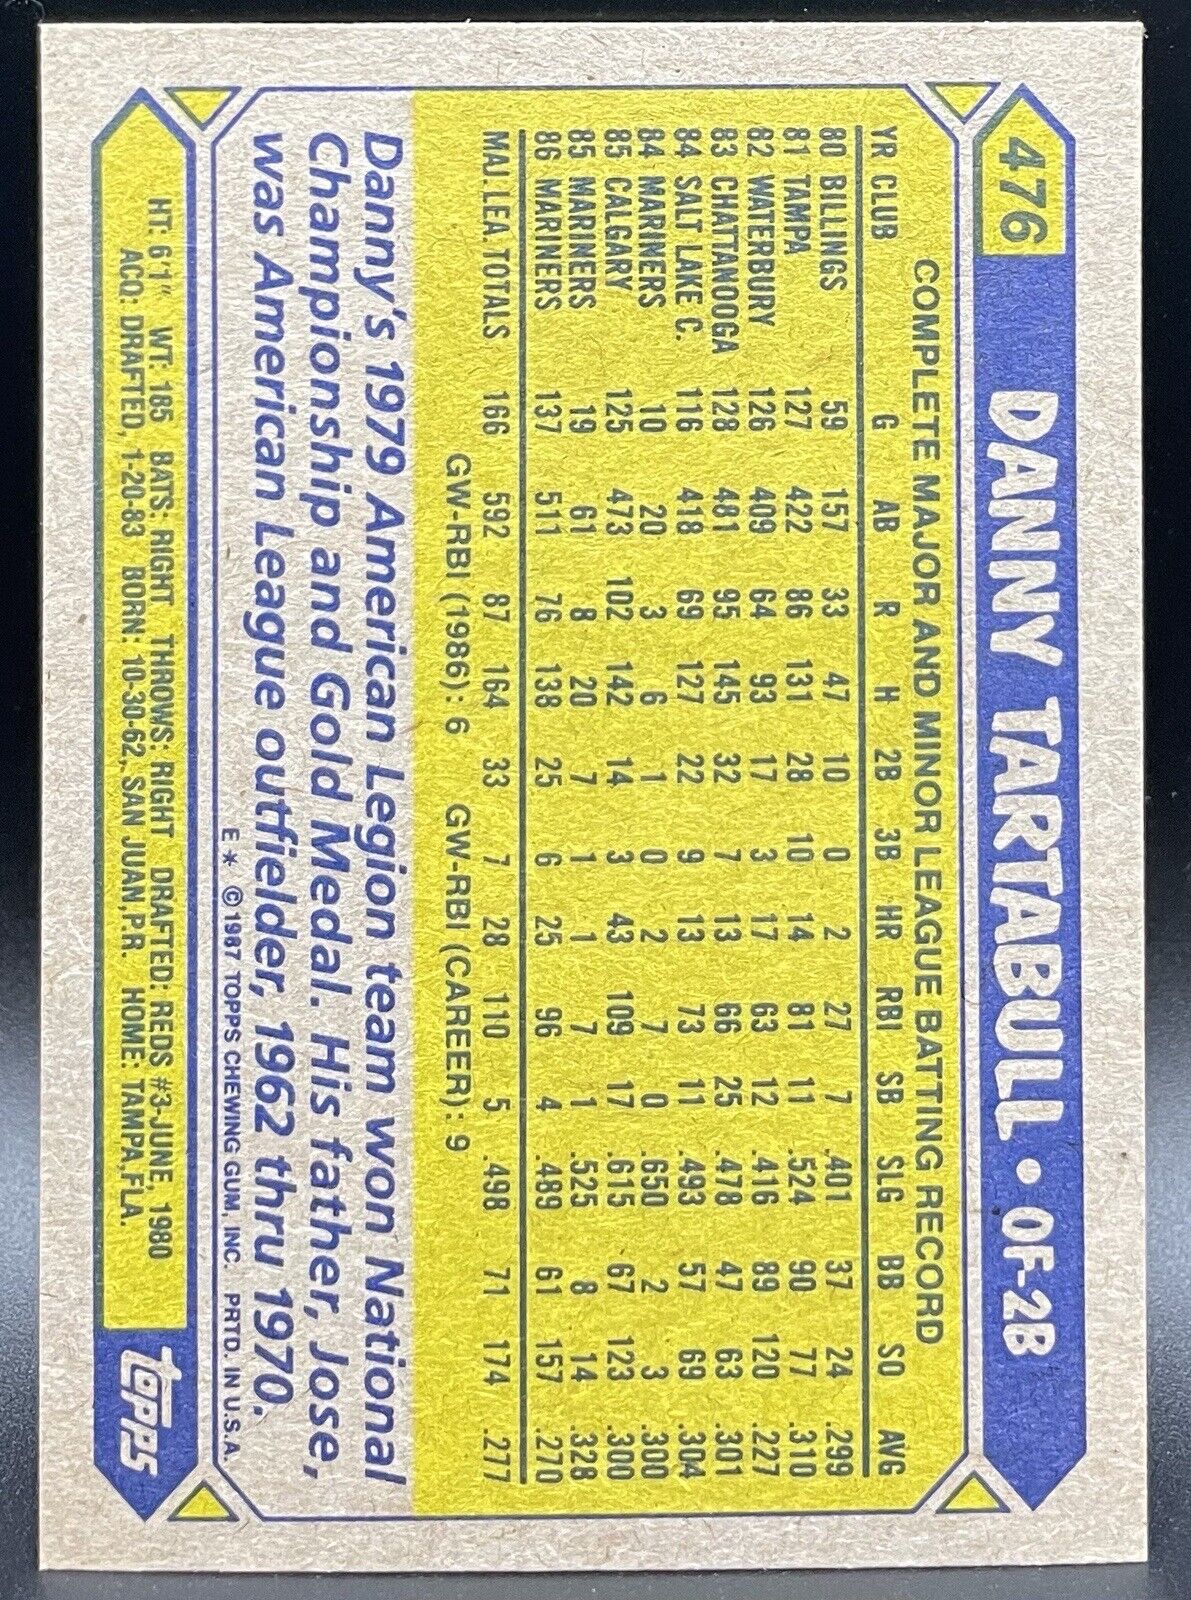 1987 Topps DANNY TARTABULL #476 All Star Rookie Seattle Mariners 🔥⚾️🔥